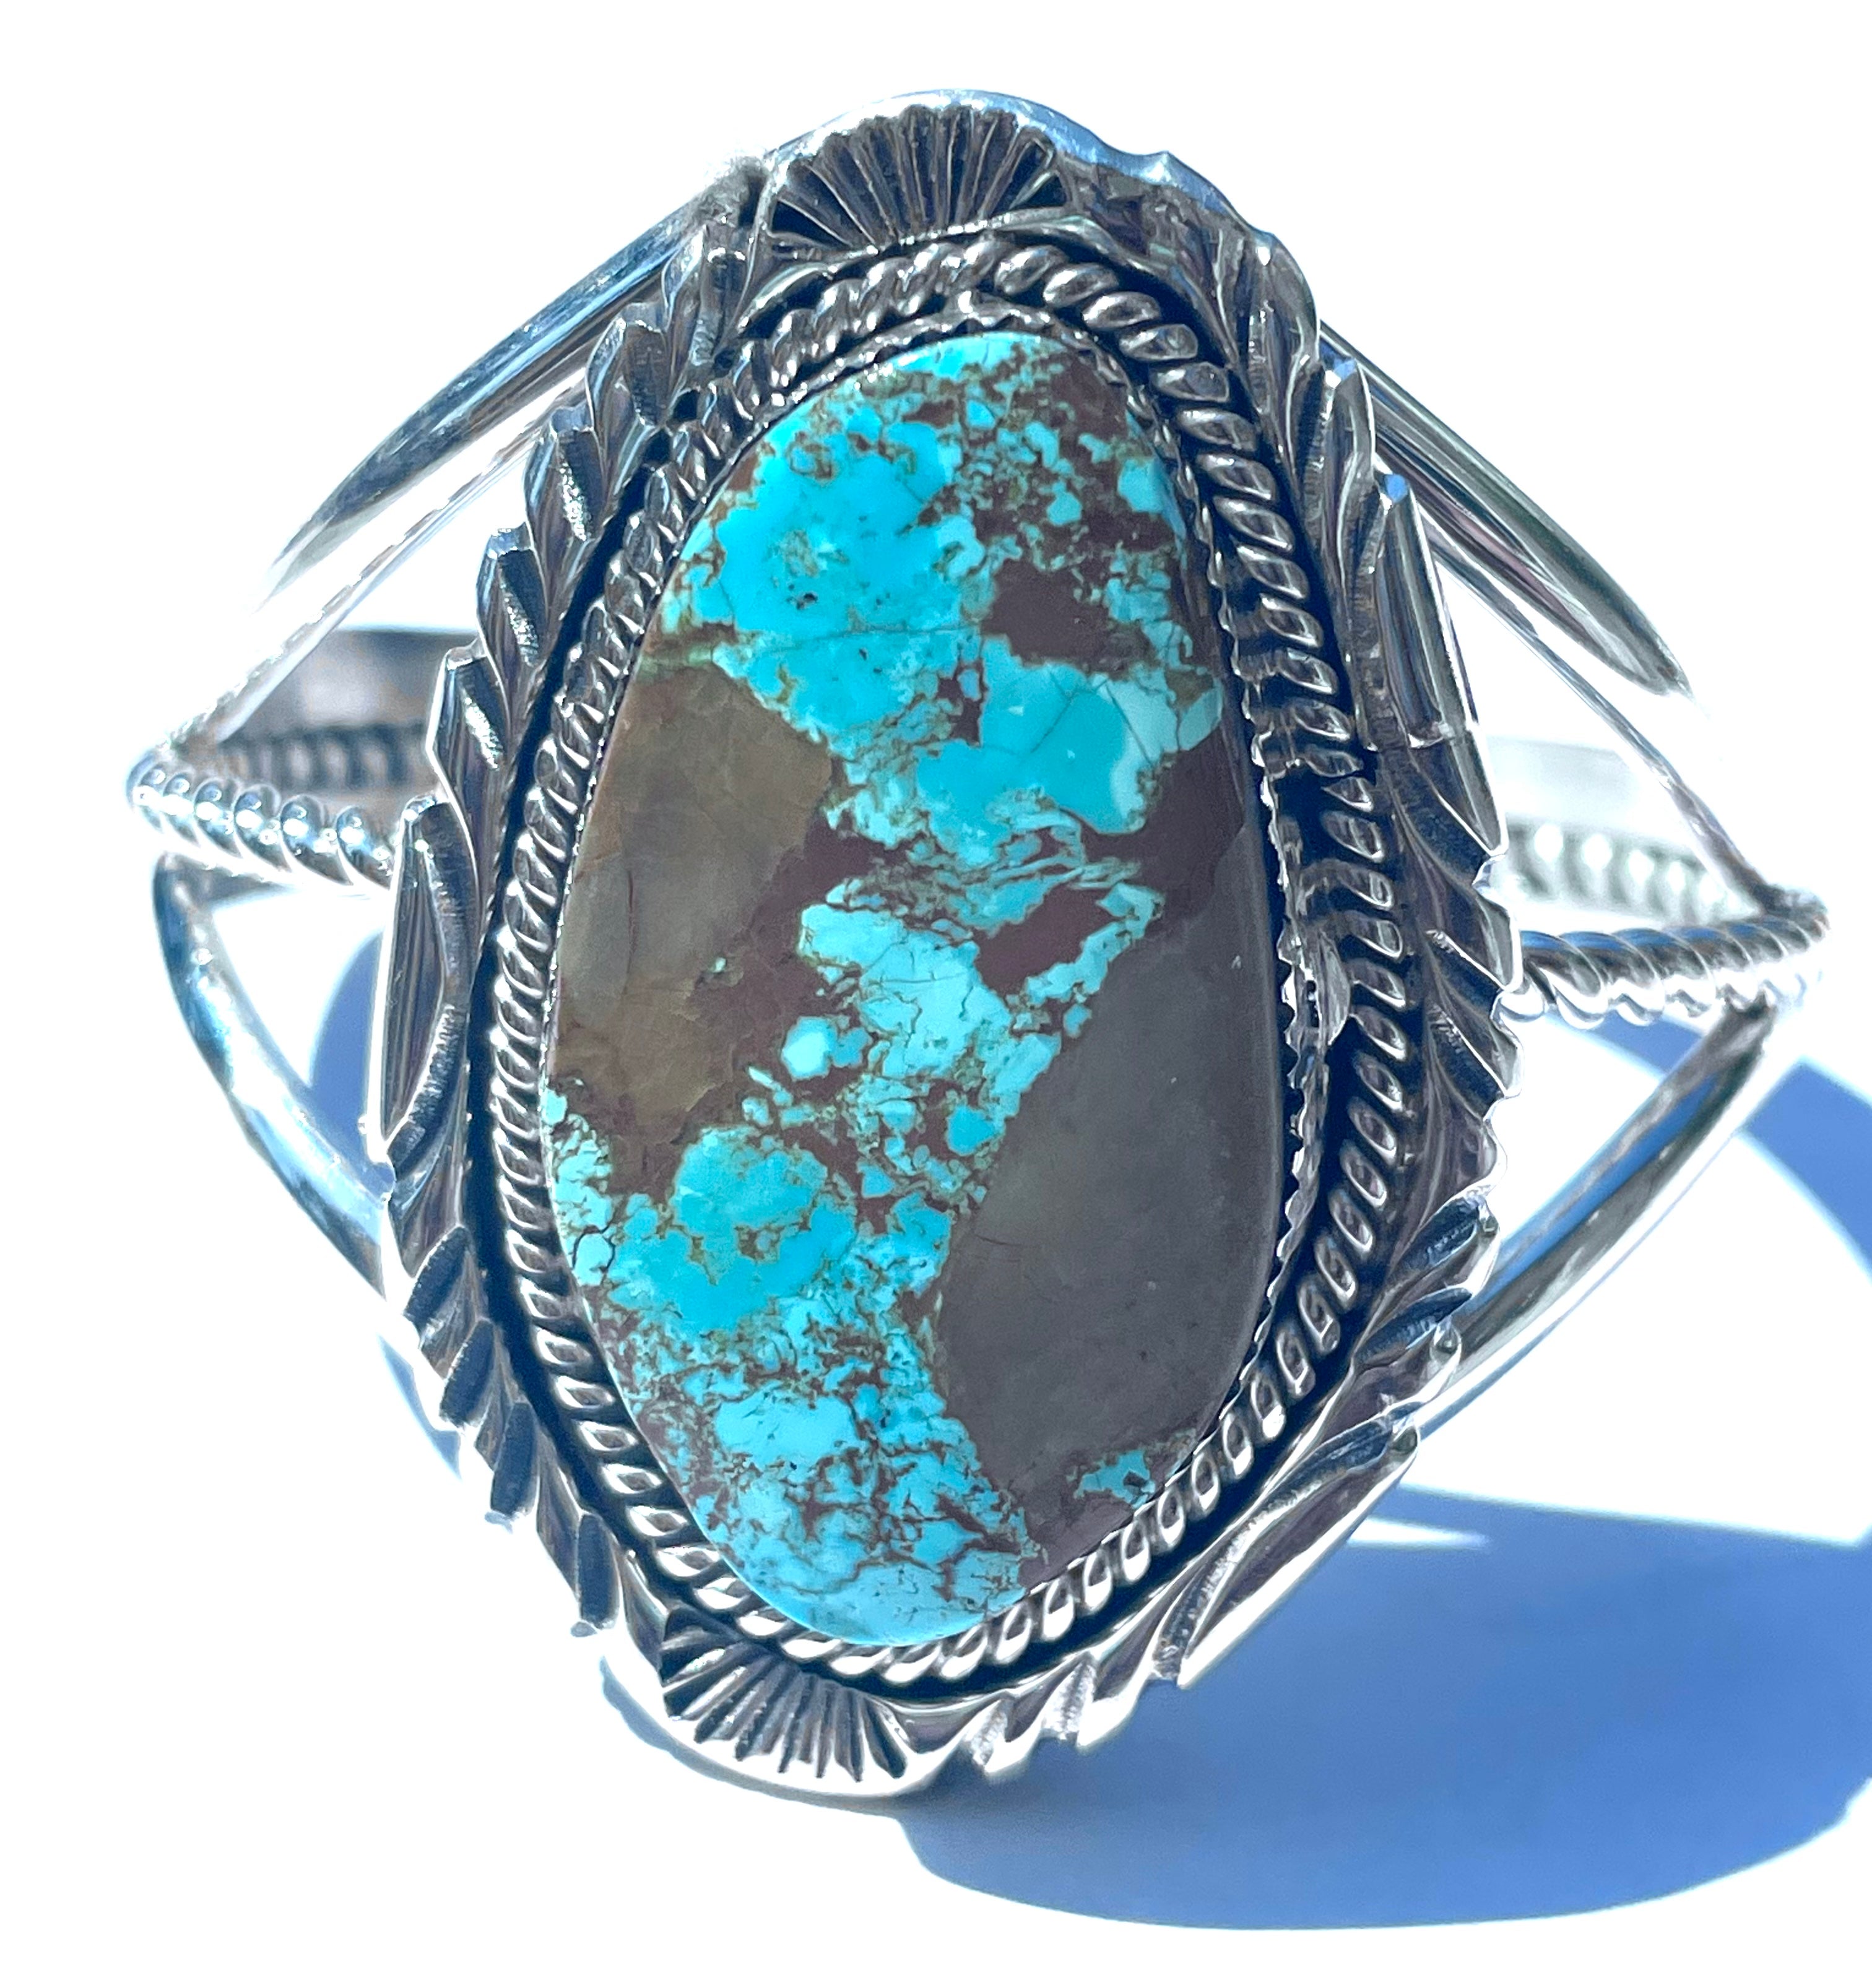 Navajo bracelet with turquoise stone with matrix stone